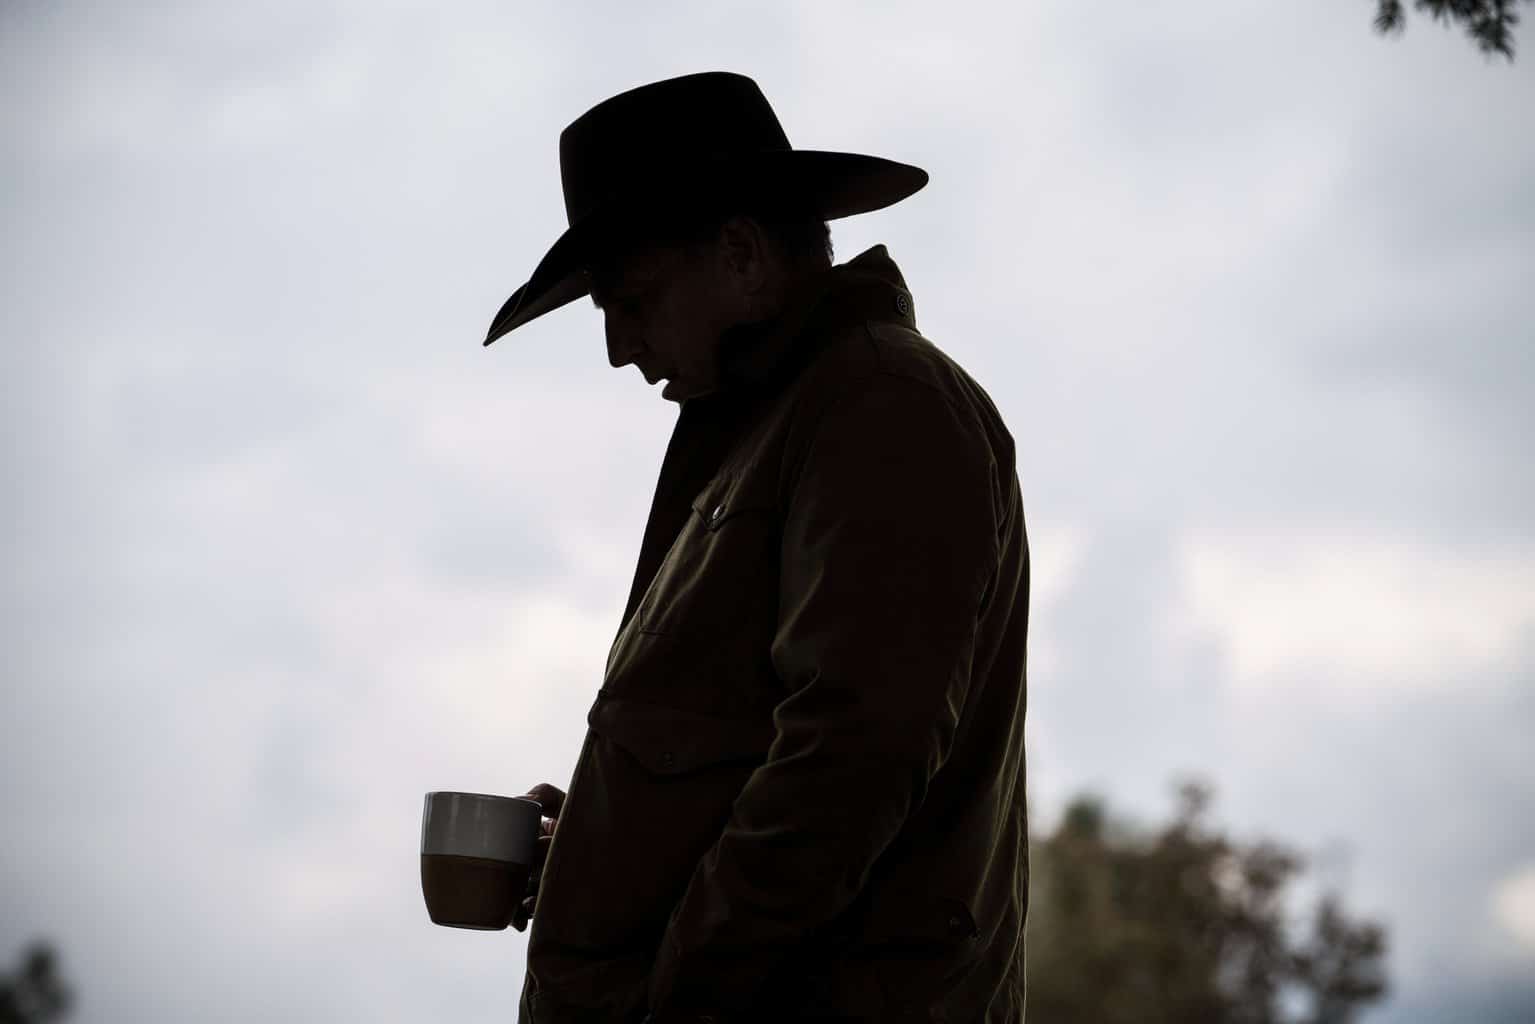 John Dutton in silhouette, holding his coffee mug